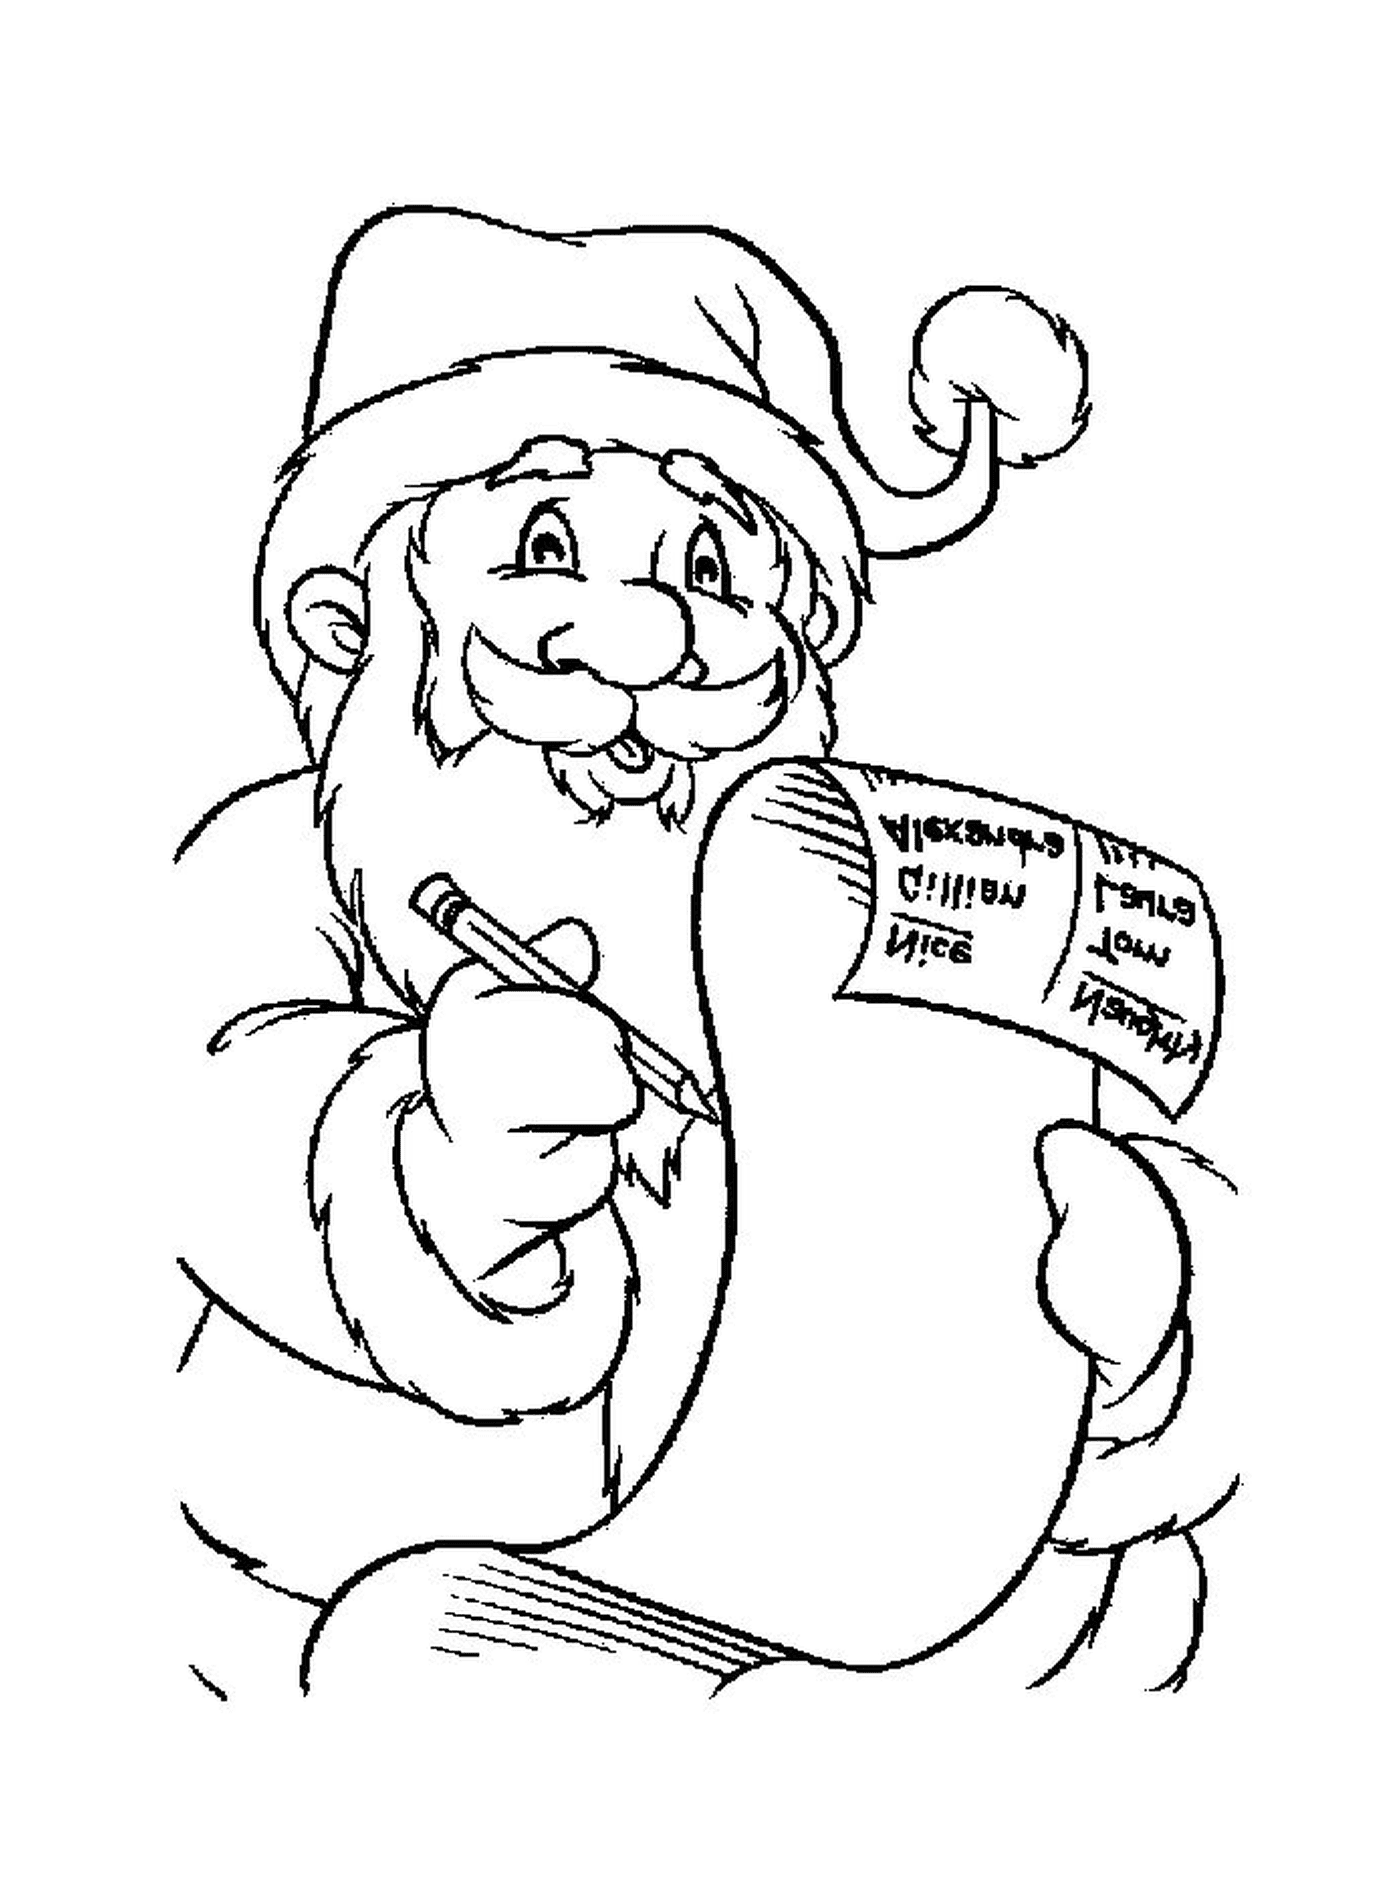  Санта Клаус со списком подарков 